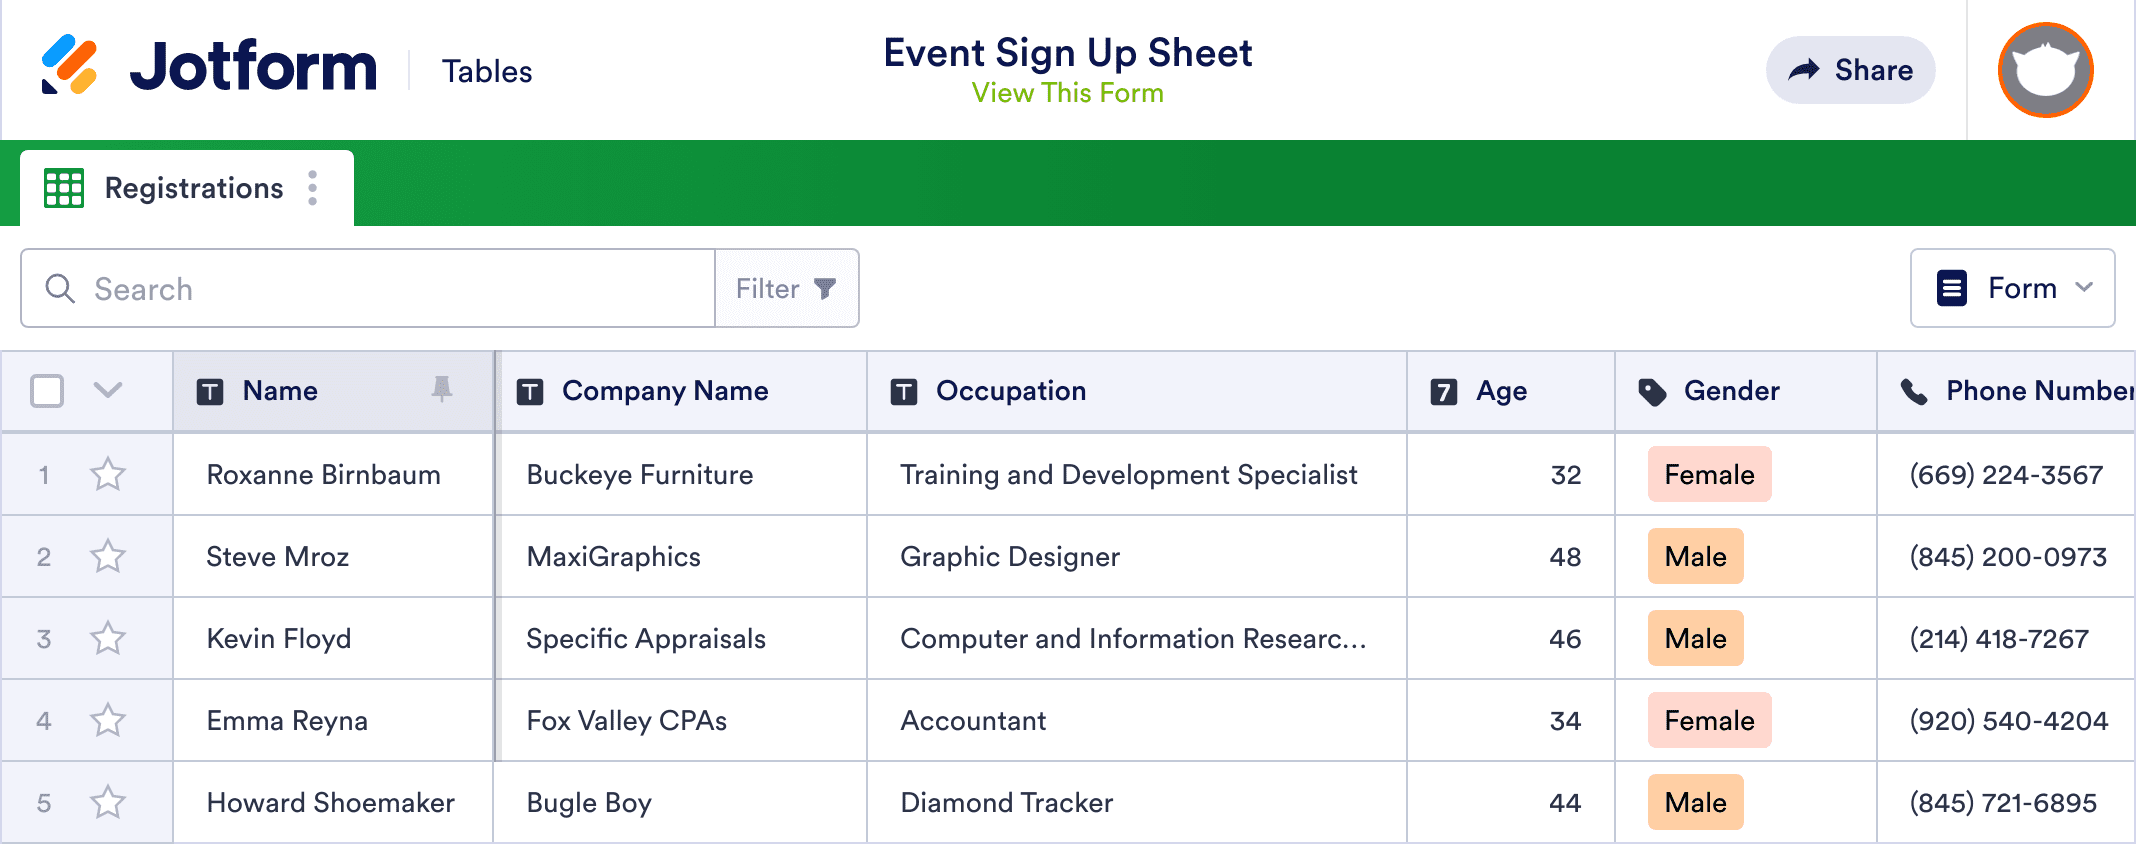 Event Sign Up Sheet Template | Jotform Tables